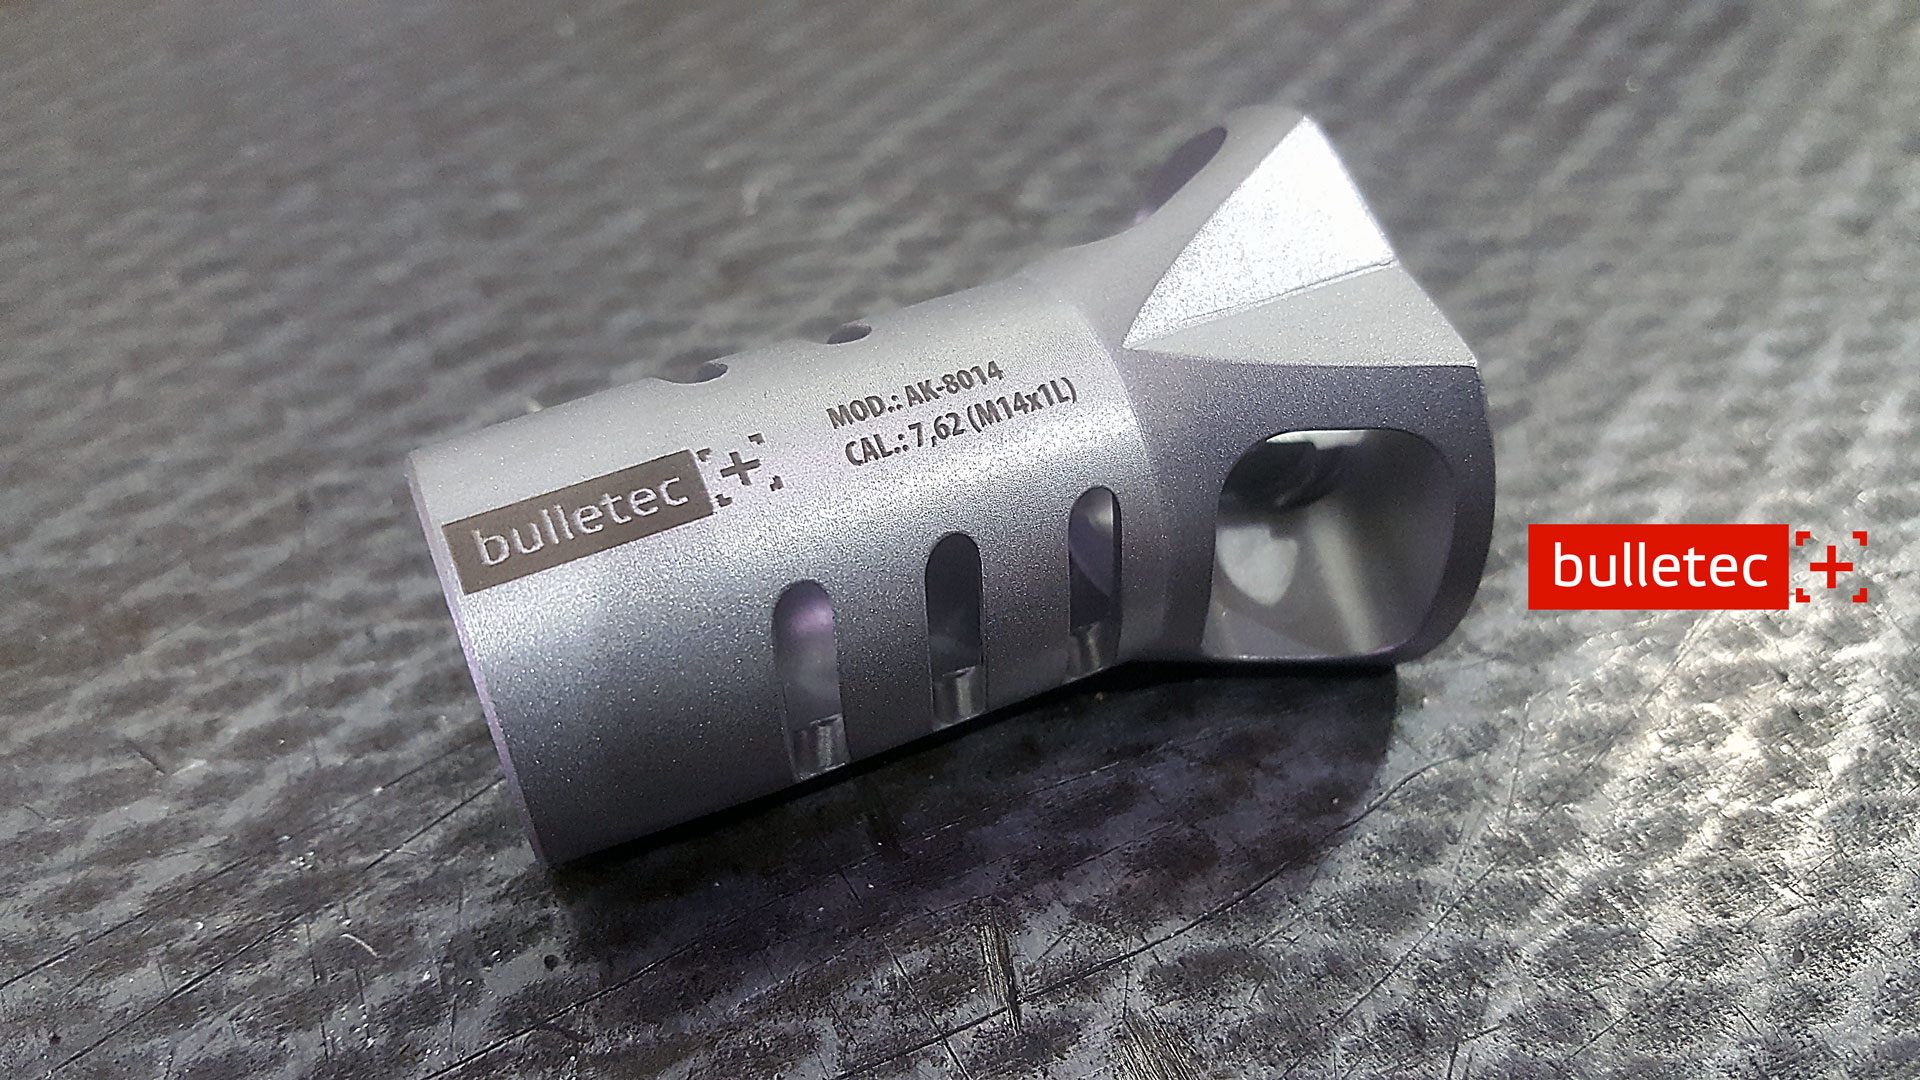 ДТК Bulletec модель AP-8014 для калибра 7,62